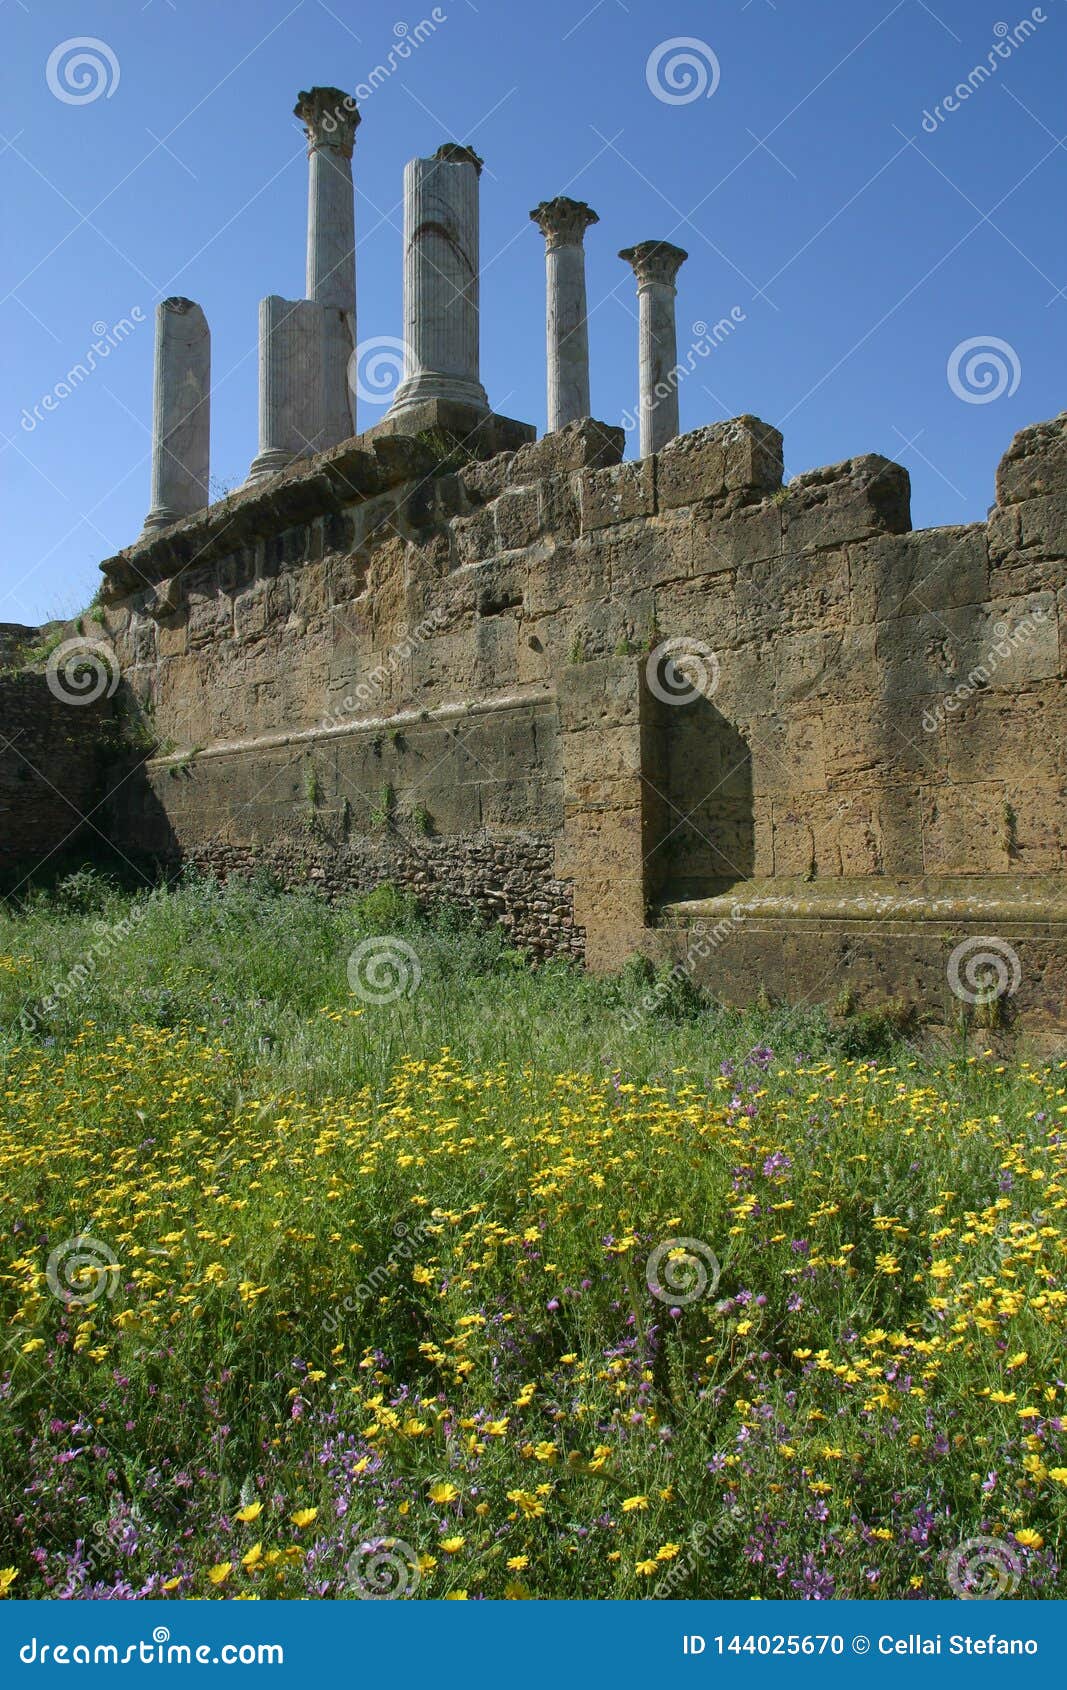 tunis, tuburbu majus, the archeologic roman site.